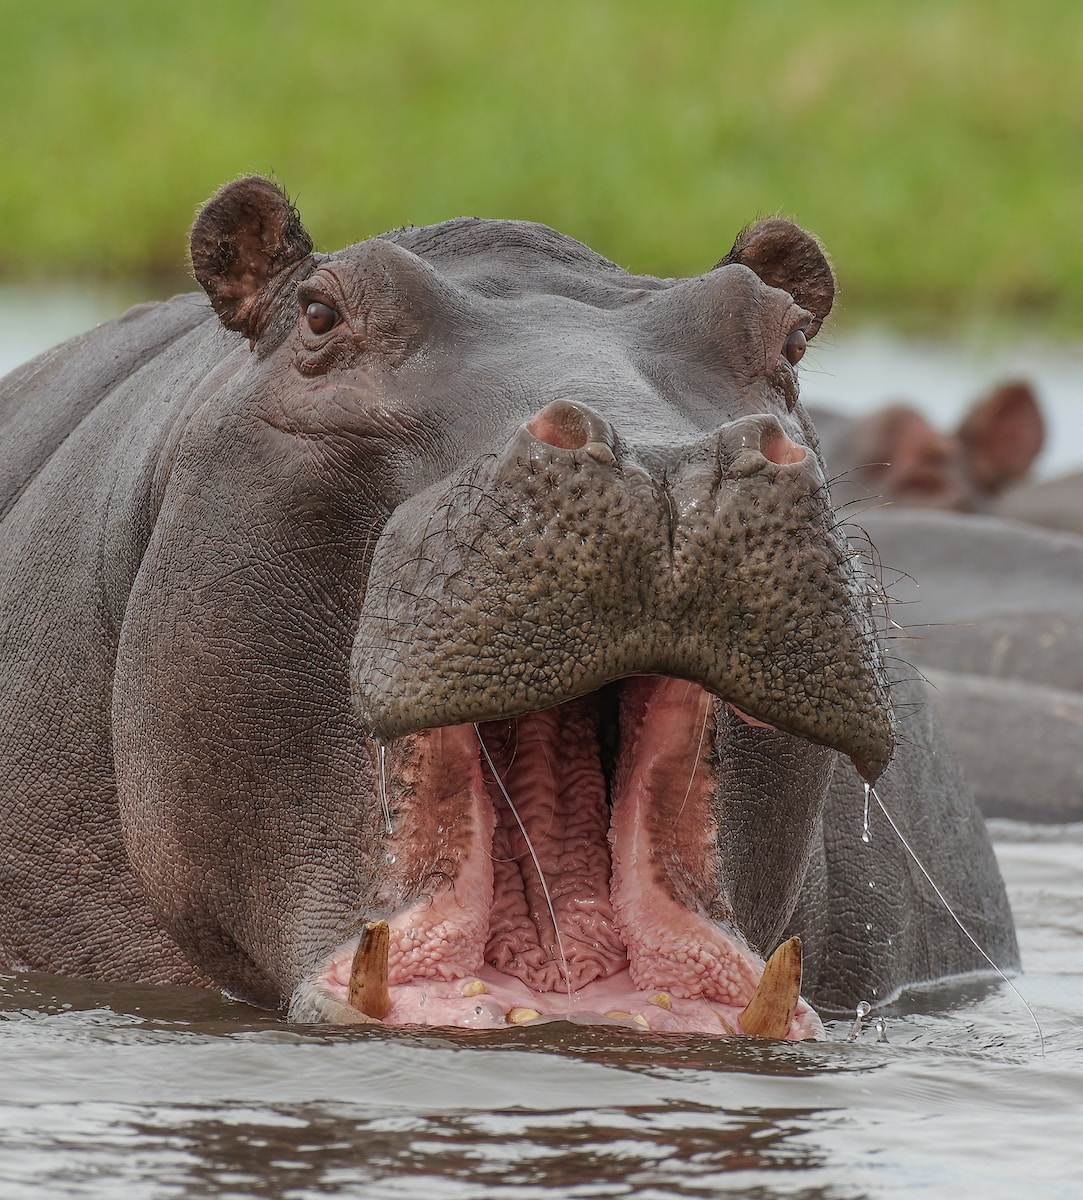 a hippopotamus